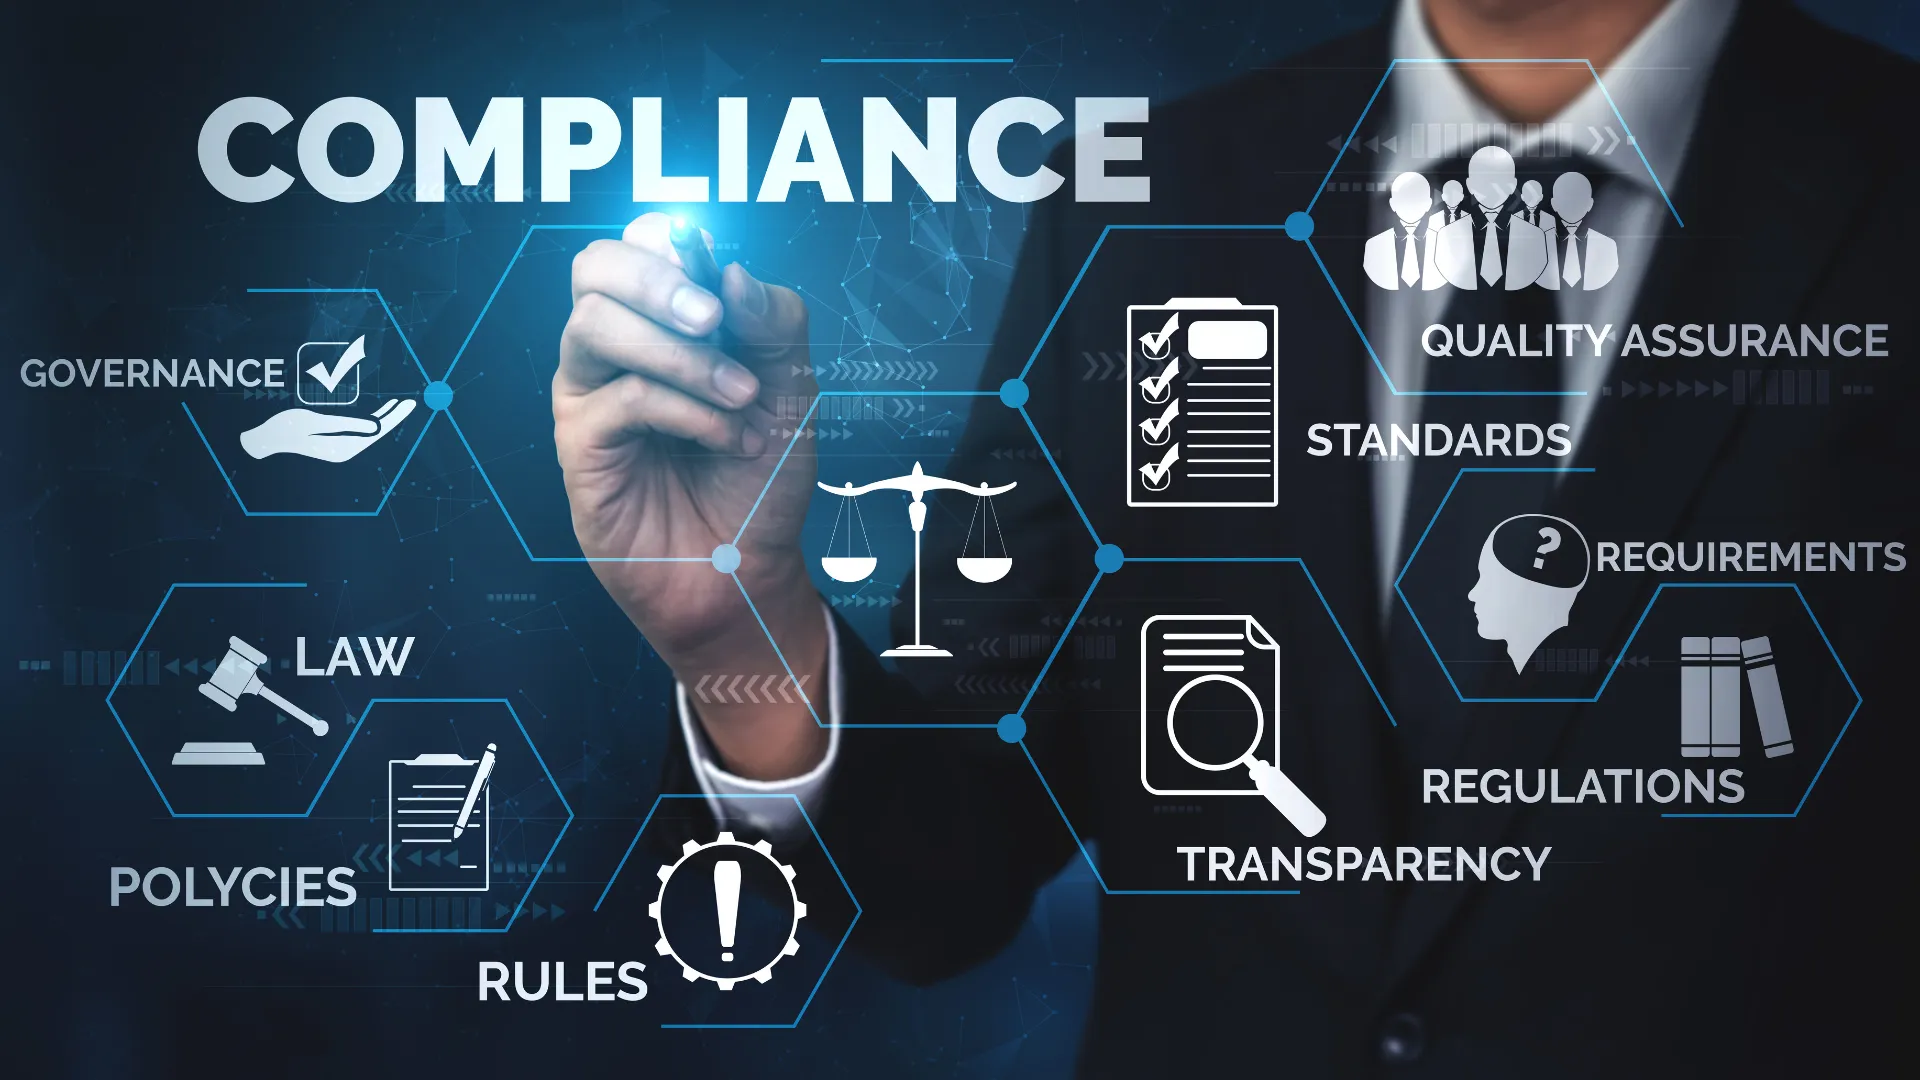 Compliance Management Challenges in Enterprise Environments